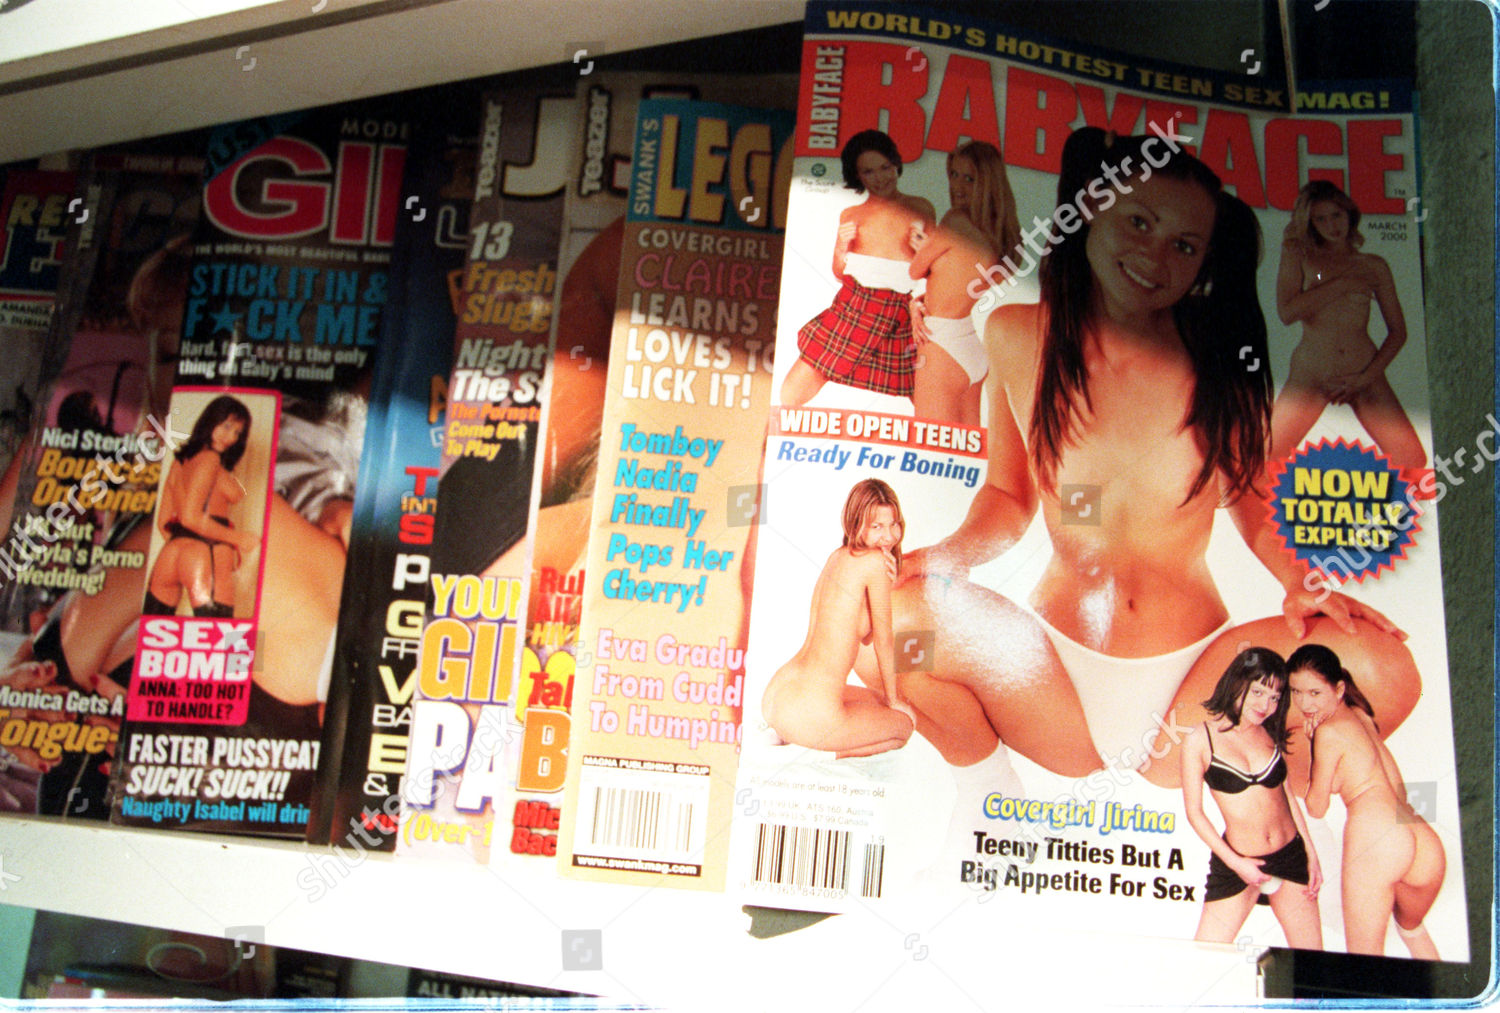 Babyface Porn Magazine - Tube Station Newspaper Shops Stalls That Sell Editorial ...